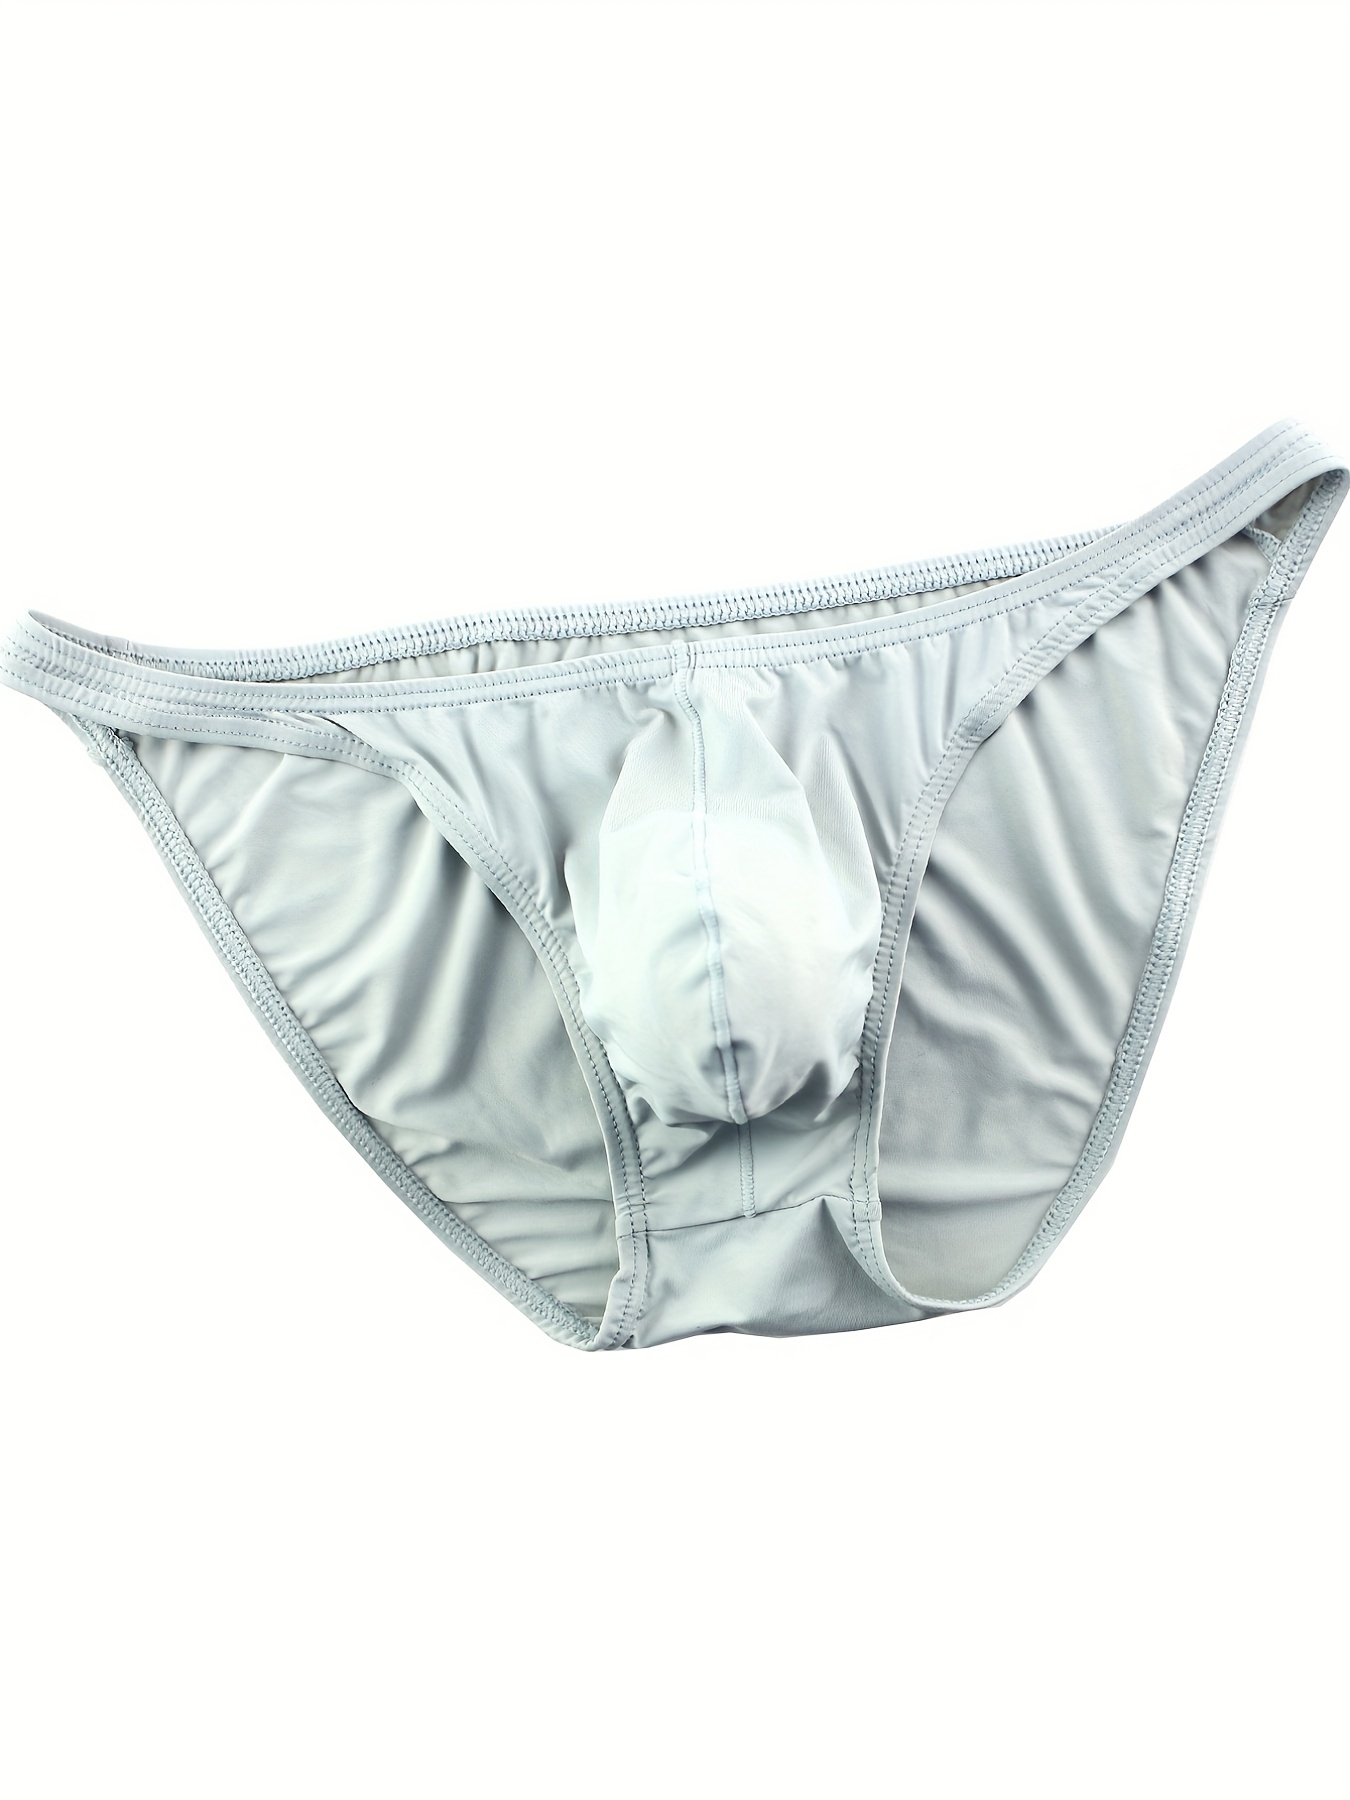 1pack Men's Fashion Breathable Comfortable Slim Briefs, Men's Sexy  Underwear For Teen